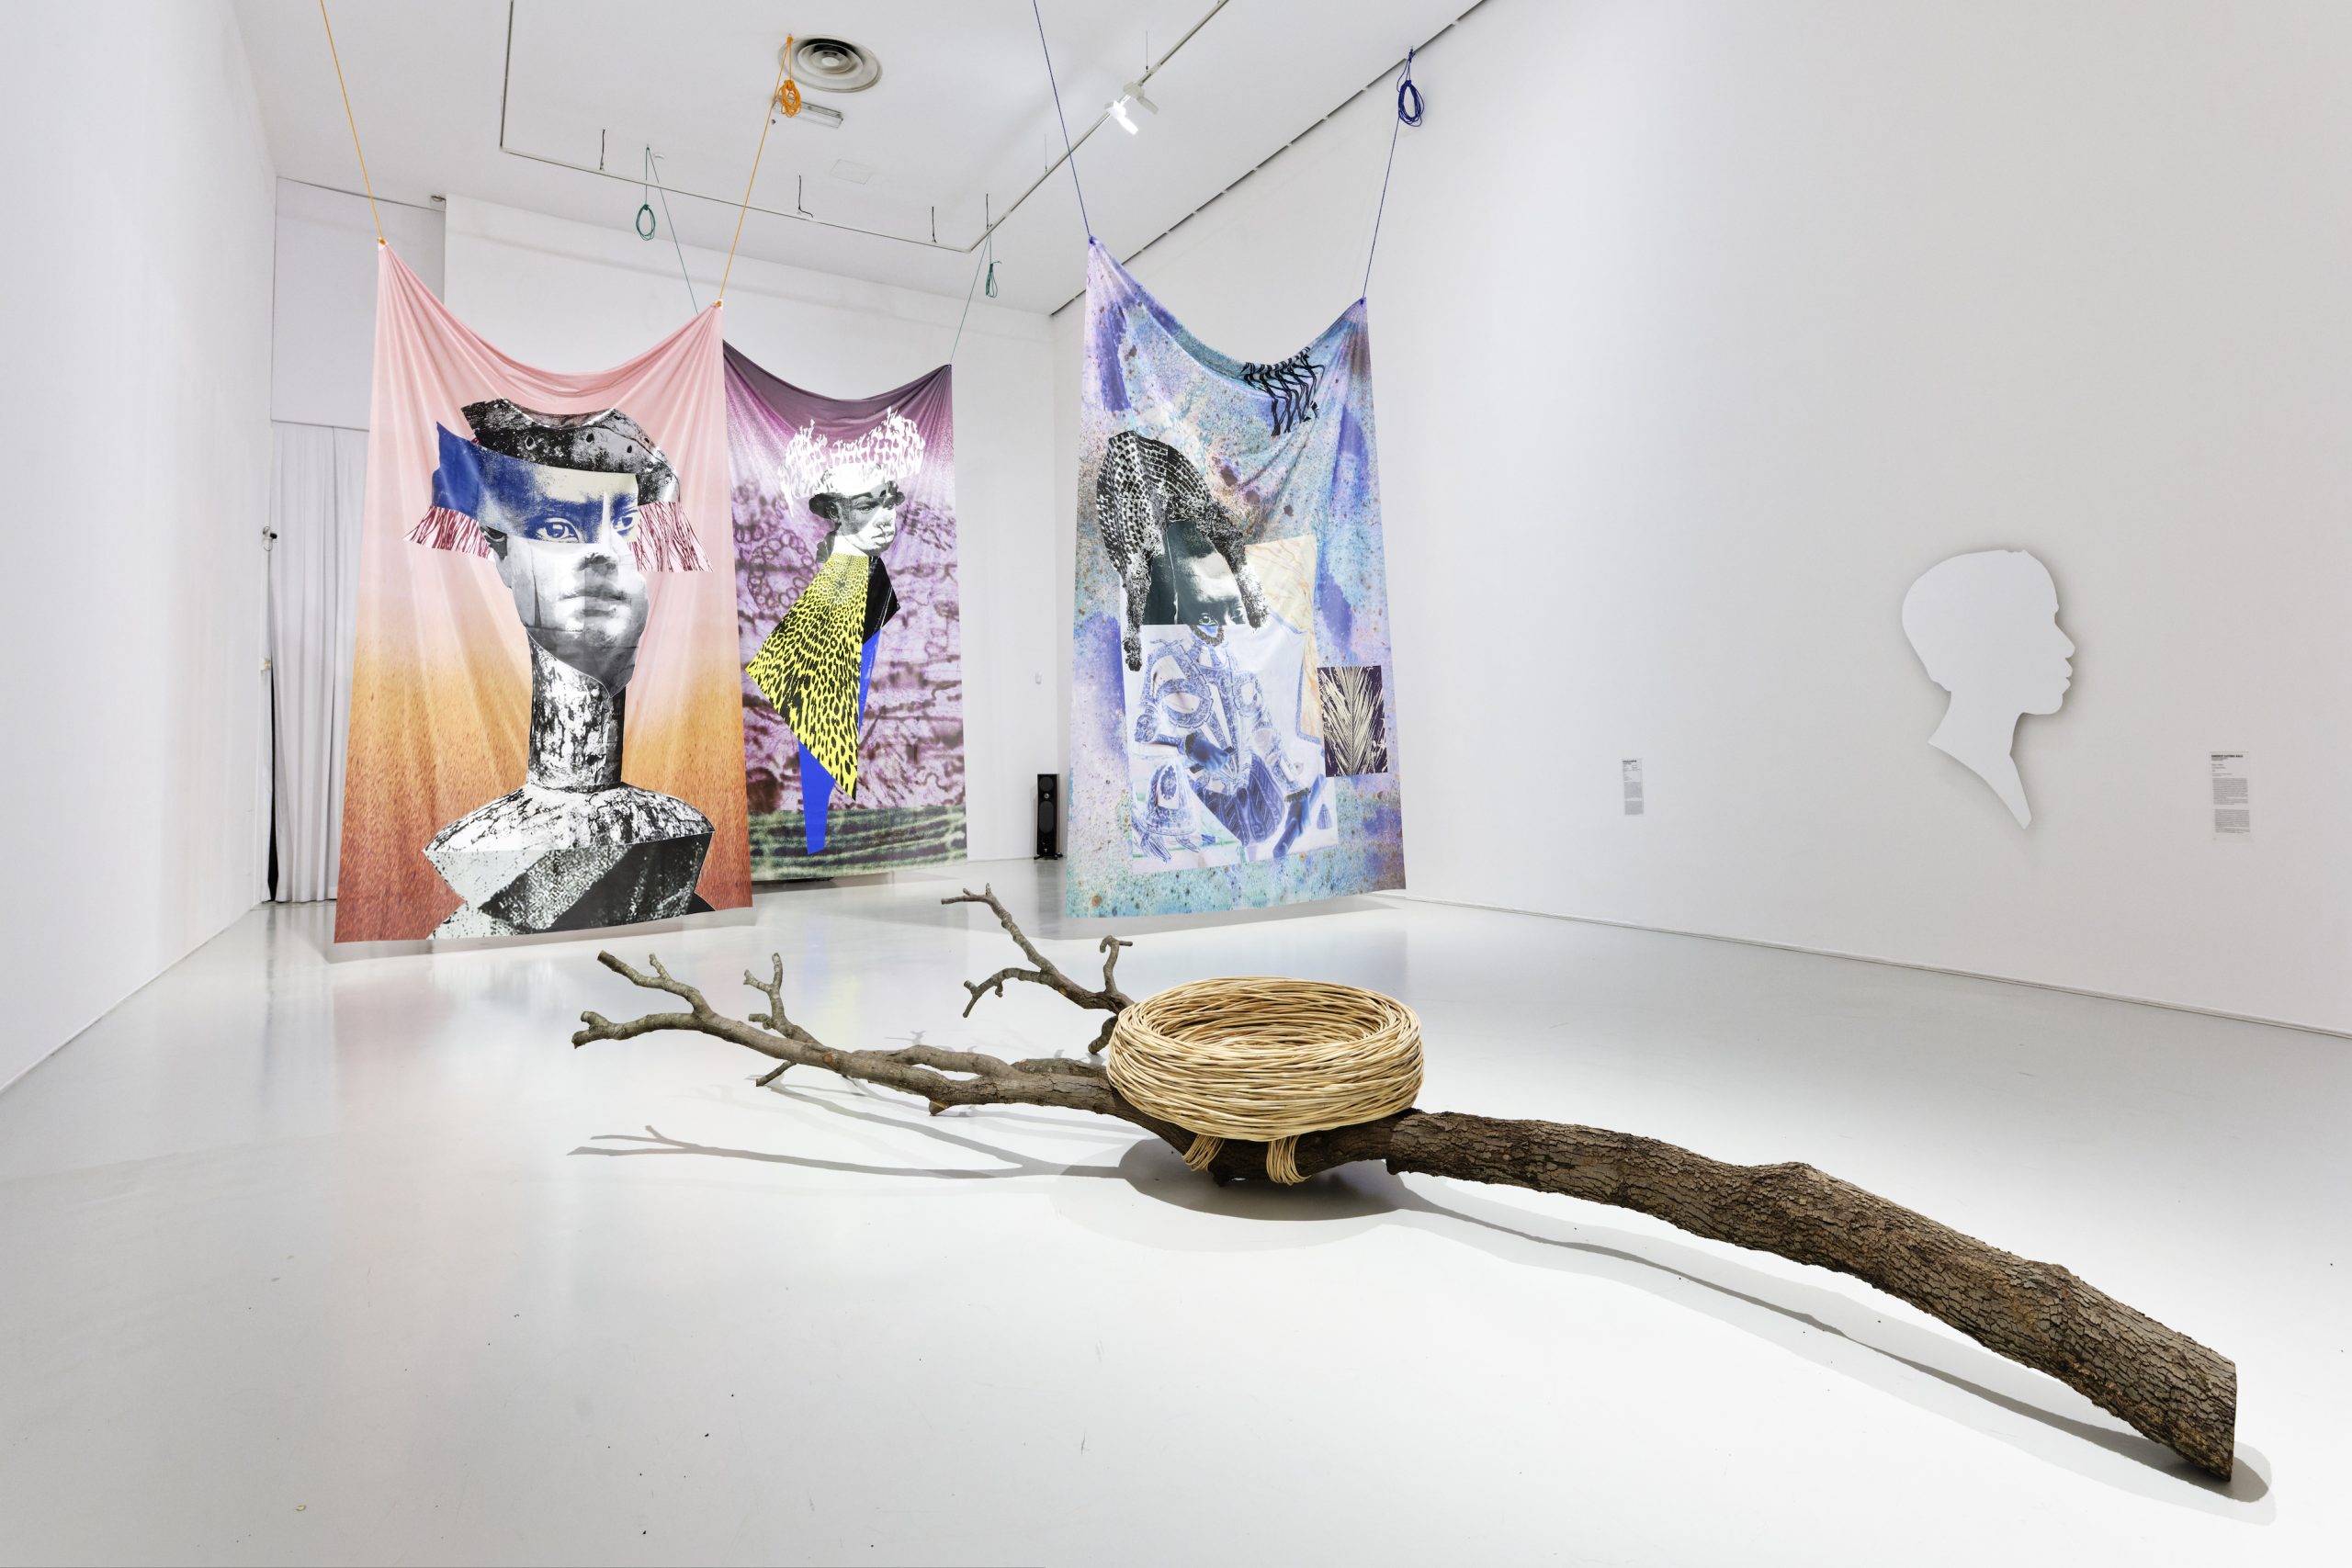 A view of different works by Porky Hefer, Raphaël Barontini and Euridice Zaituna Kala in the exhibition Globalisto at Musée d’art moderne et contemporain de Saint-Étienne Métropole.